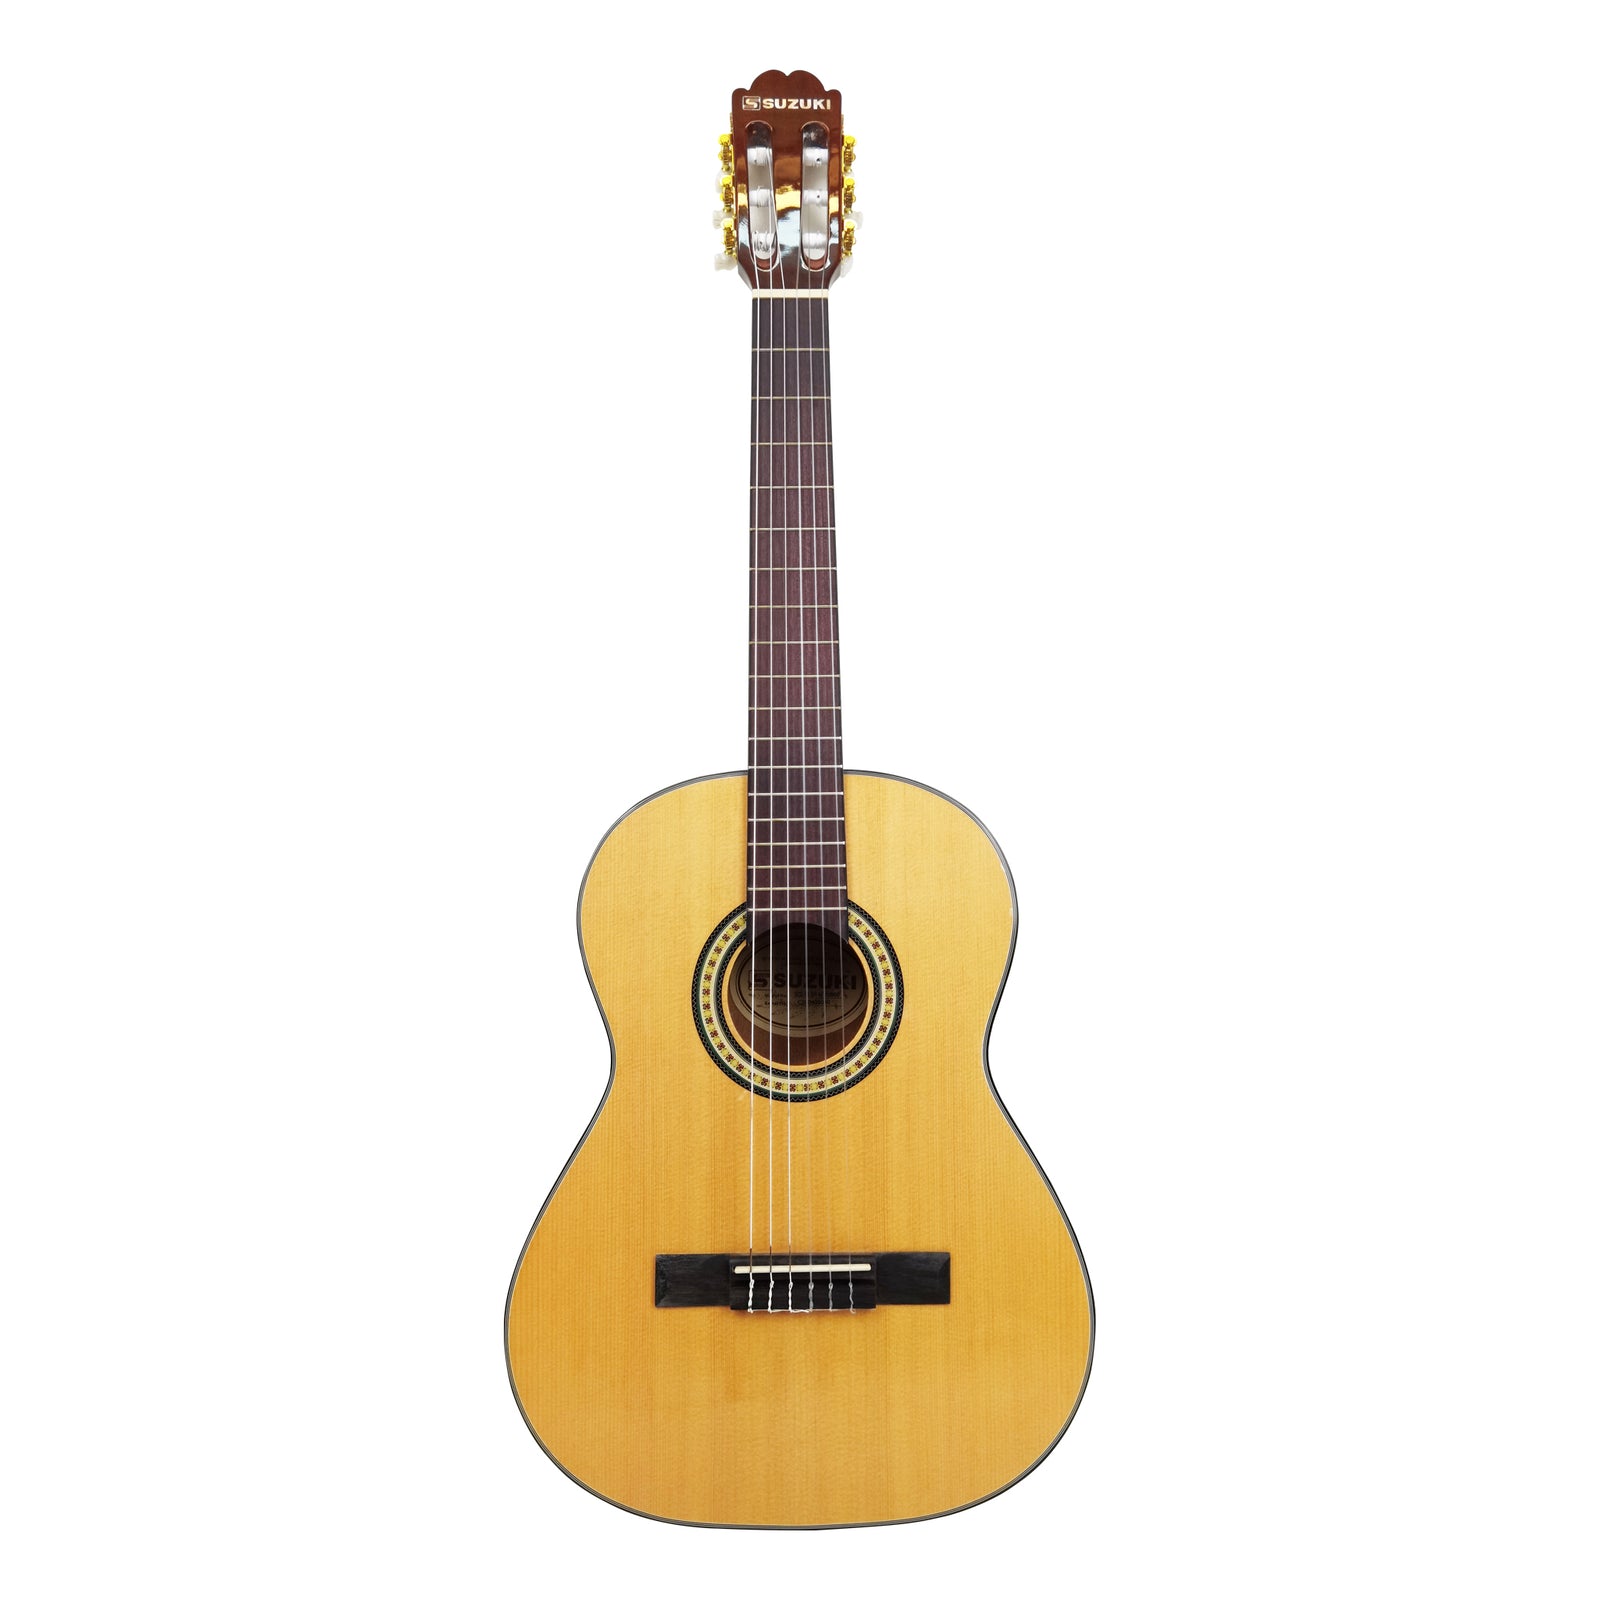 Suzuki SCG-11 Classical Guitar 3/4 size